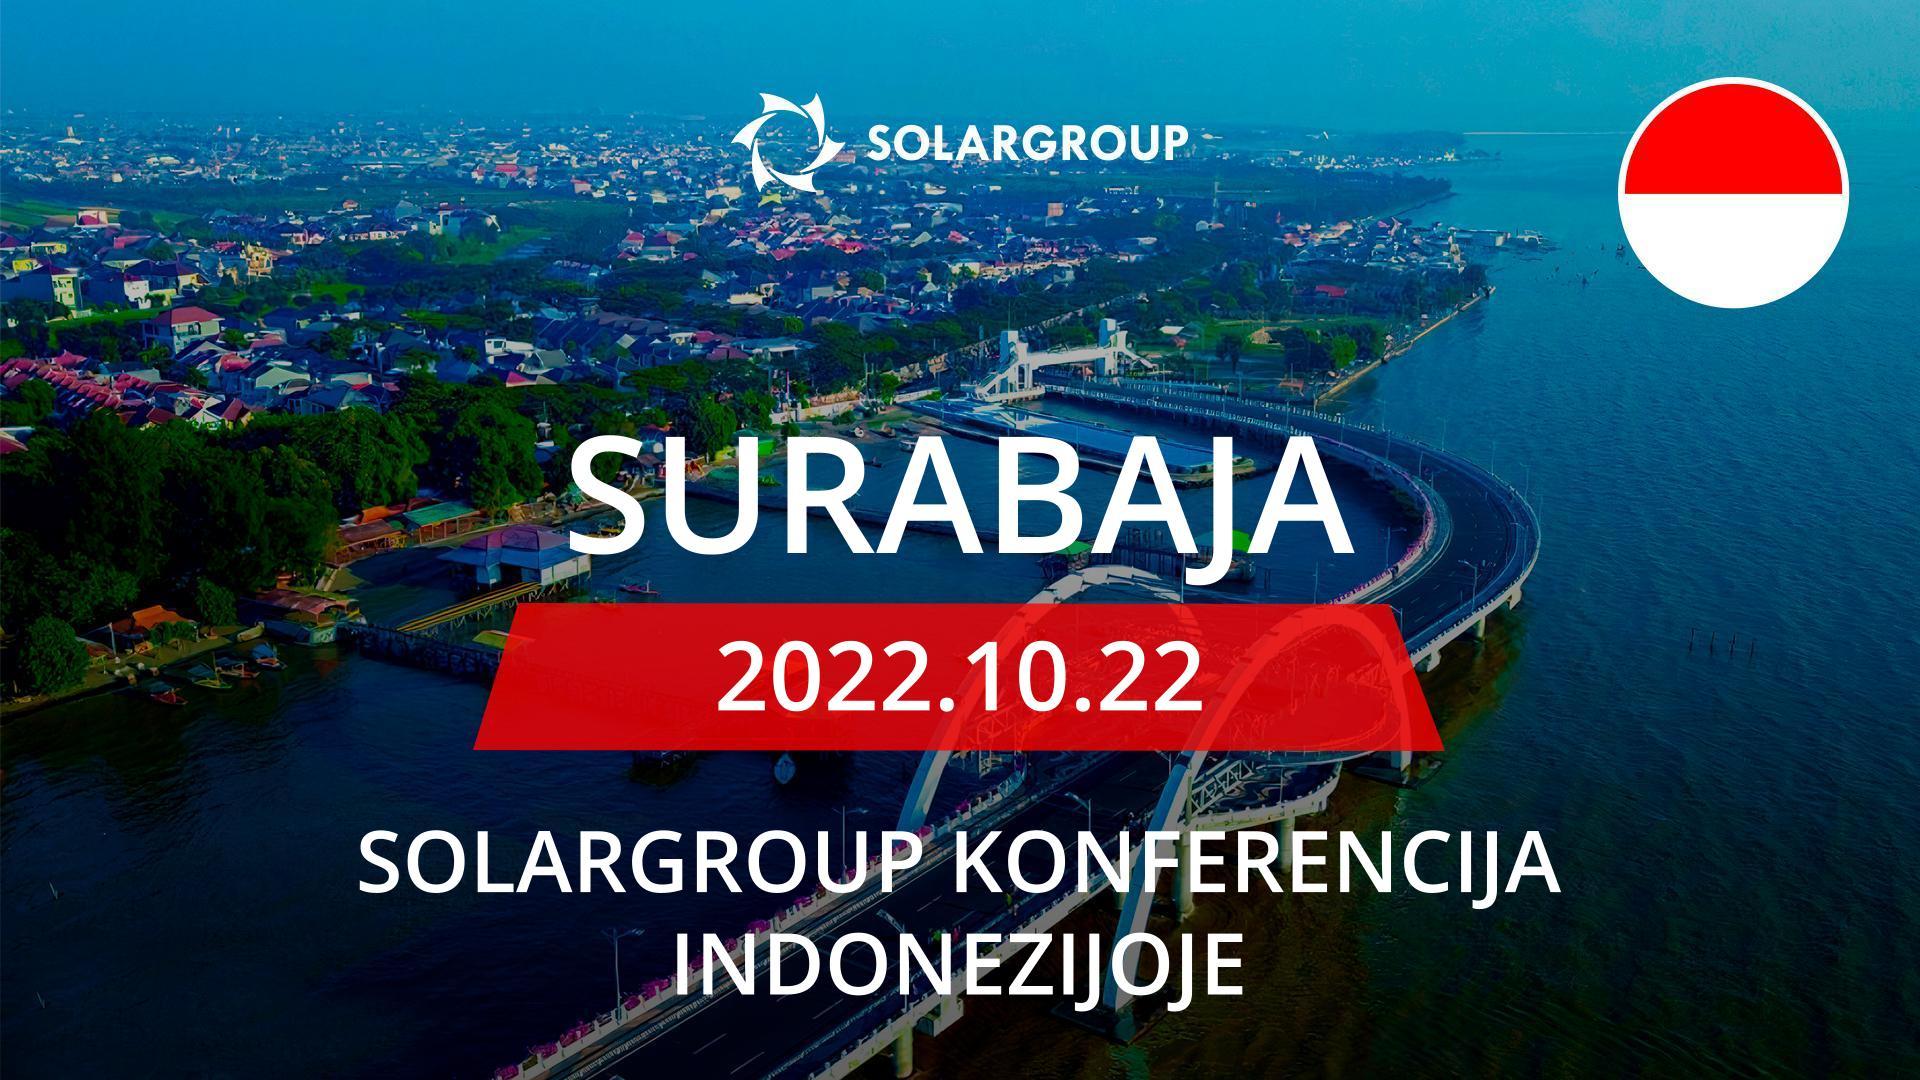 SOLARGROUP konferencija Indonezijoje: spalio 22 d., Surabaja